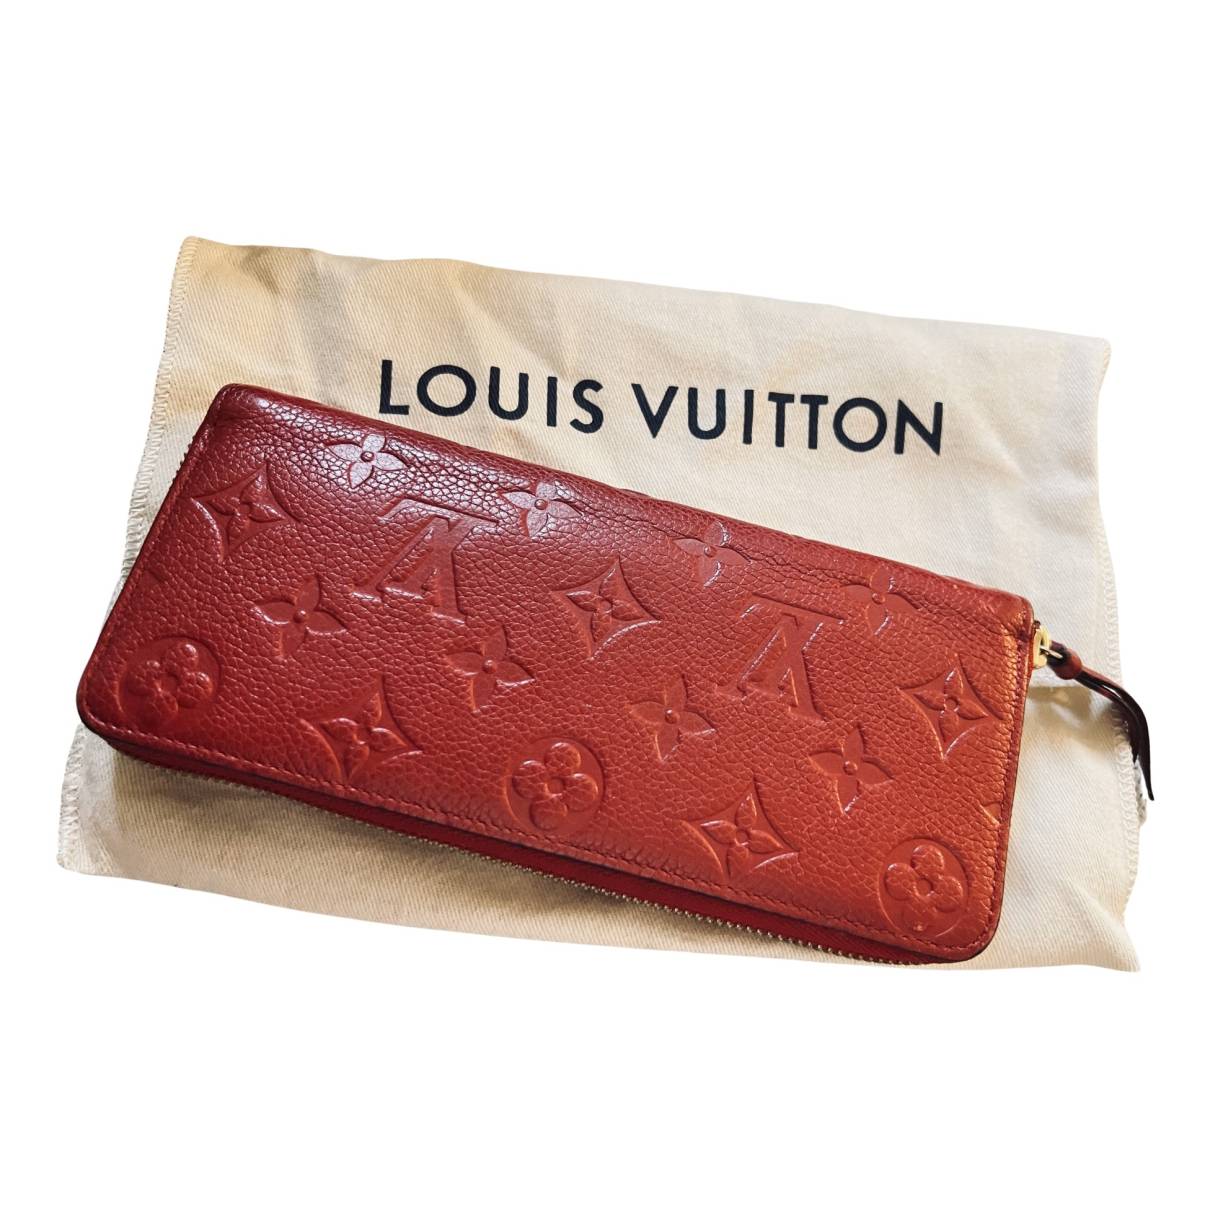  Louis Vuitton Cartera Clemence pre-amada para mujer